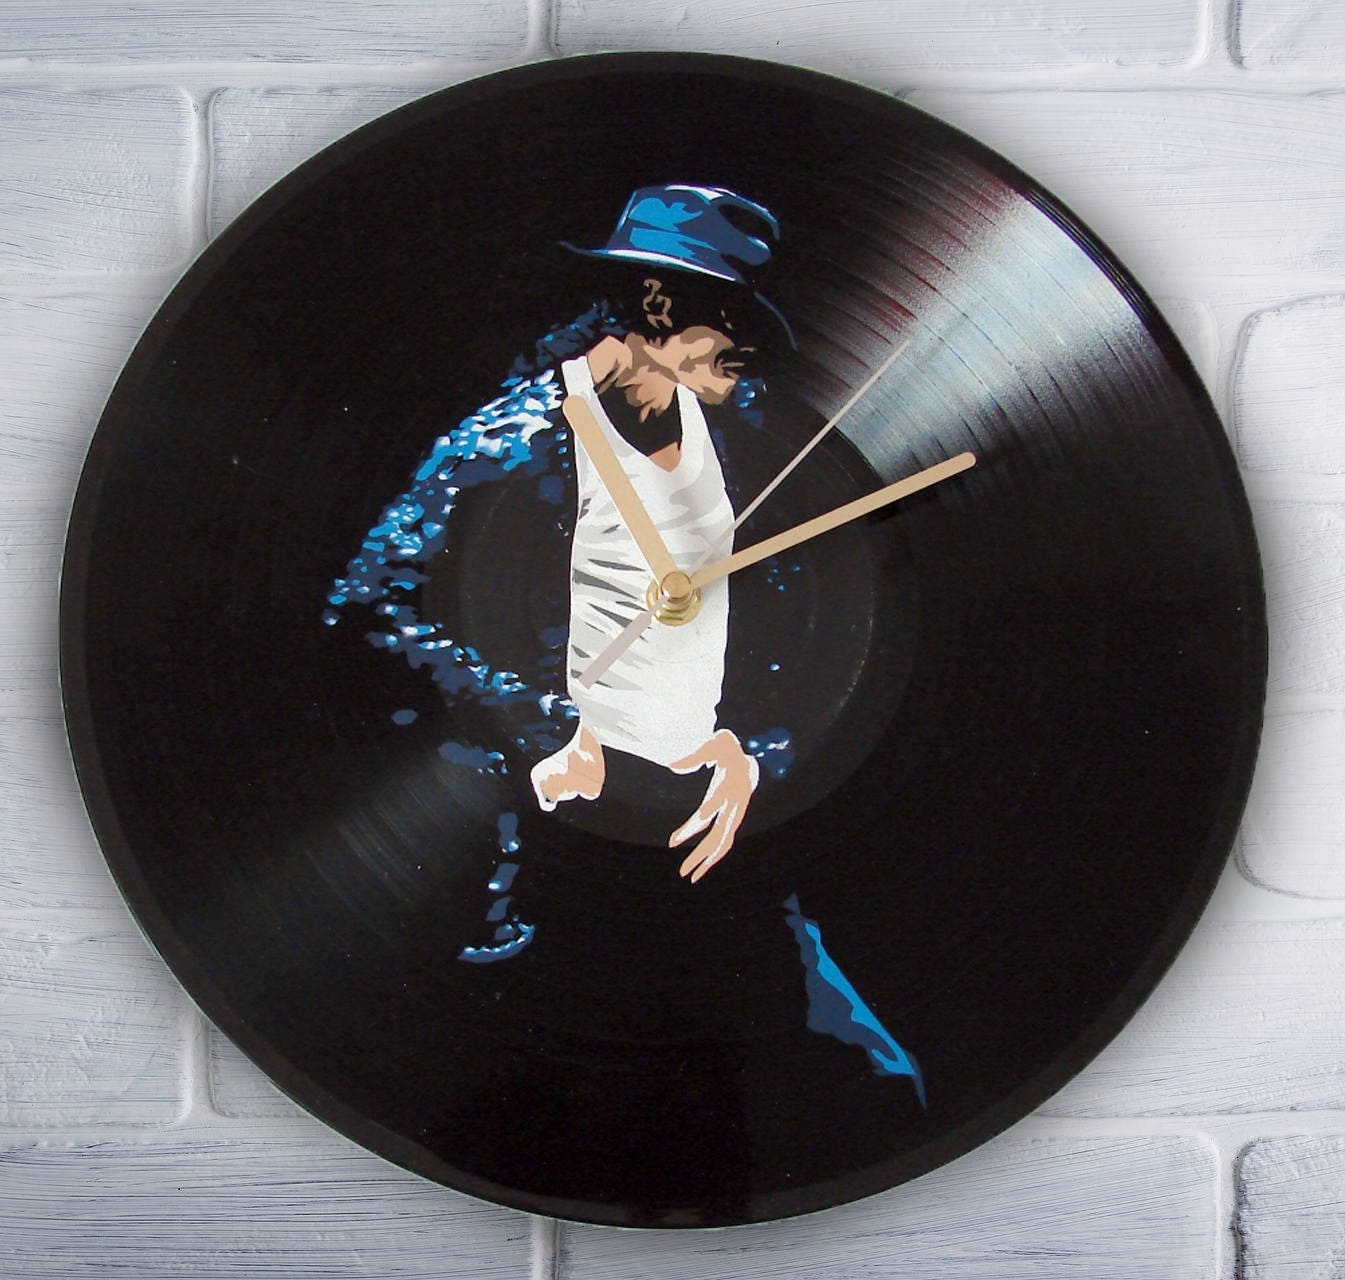 Michael Jackson Moonwalk Painted Vinyl Record Clock image